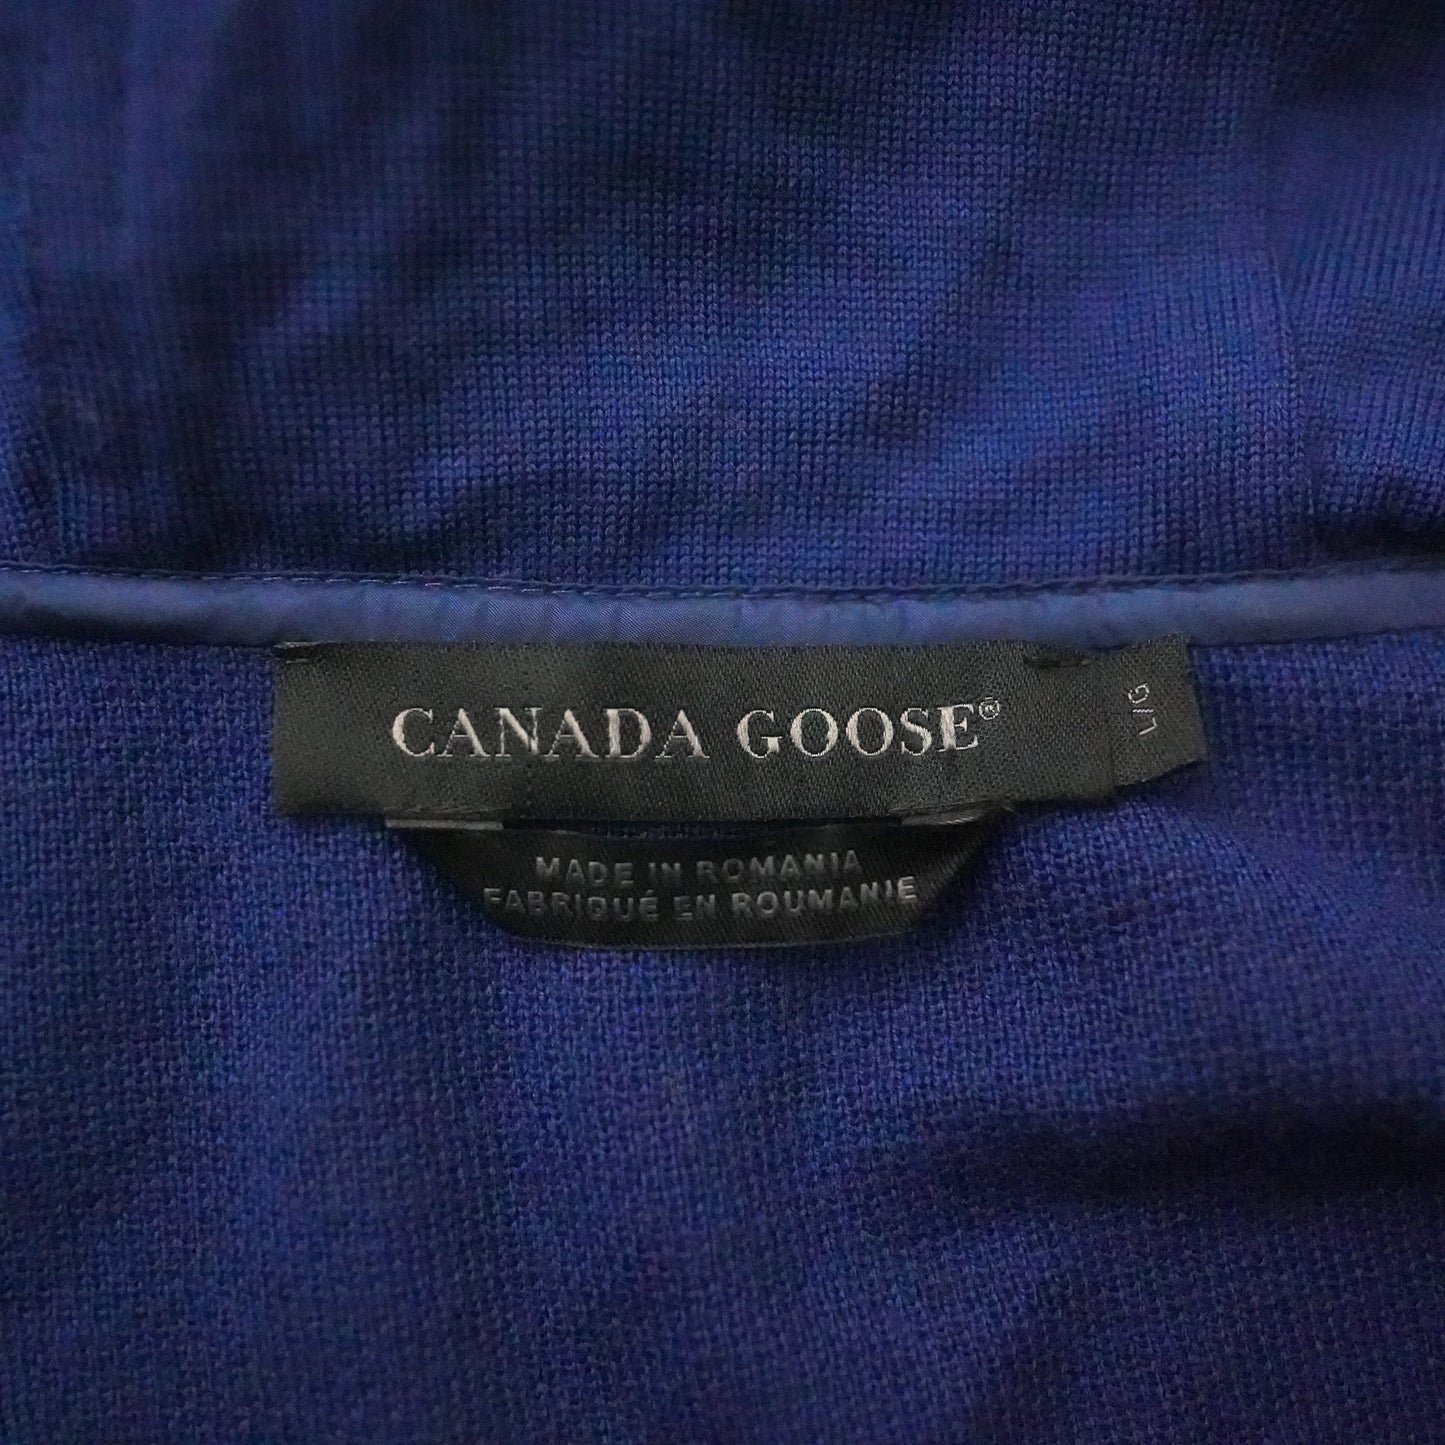 CANADA GOOSE hoodie nylon jacket